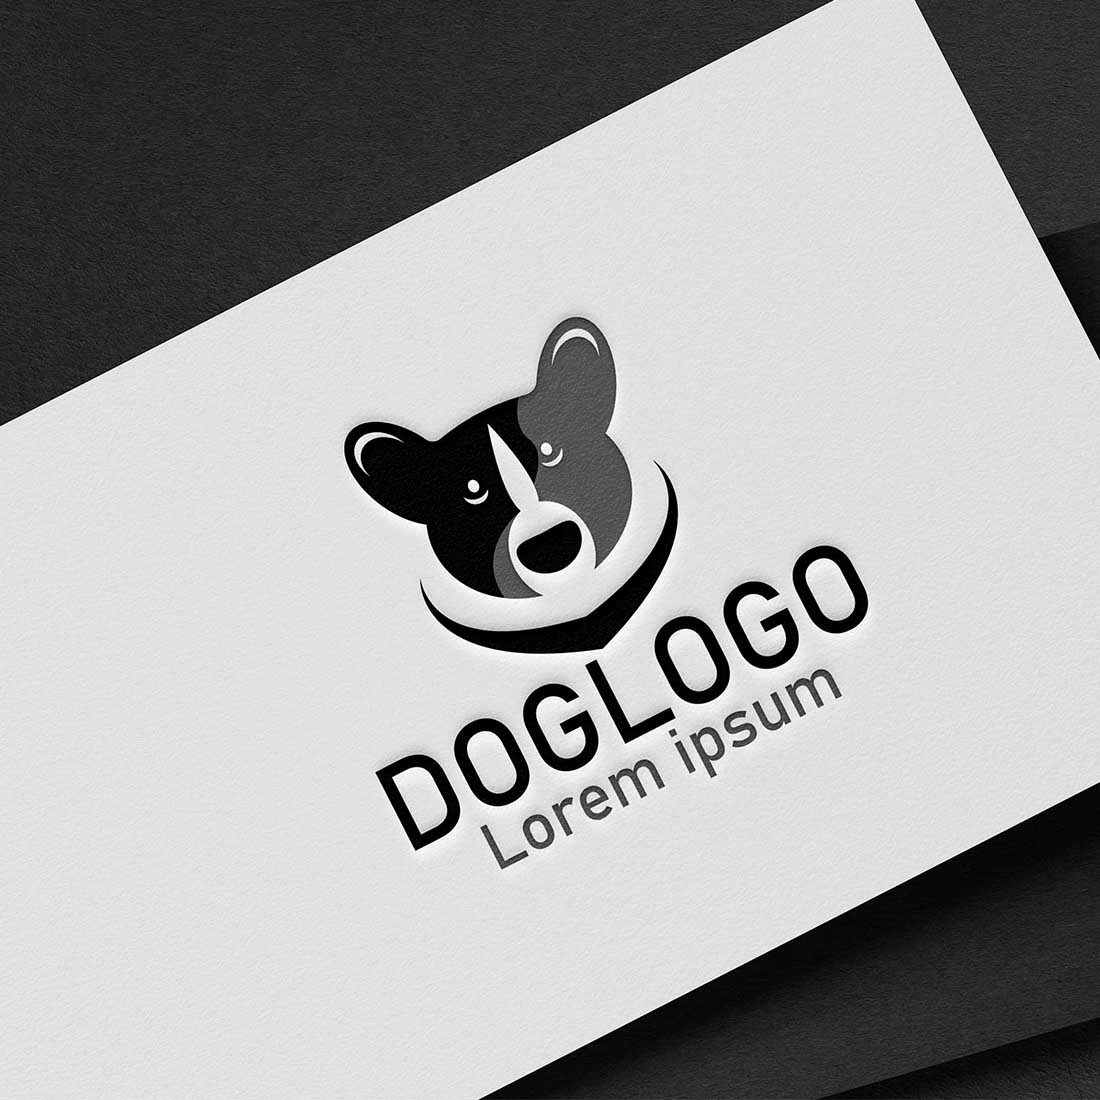 Modern Dog Logo Graphics Design cover image.